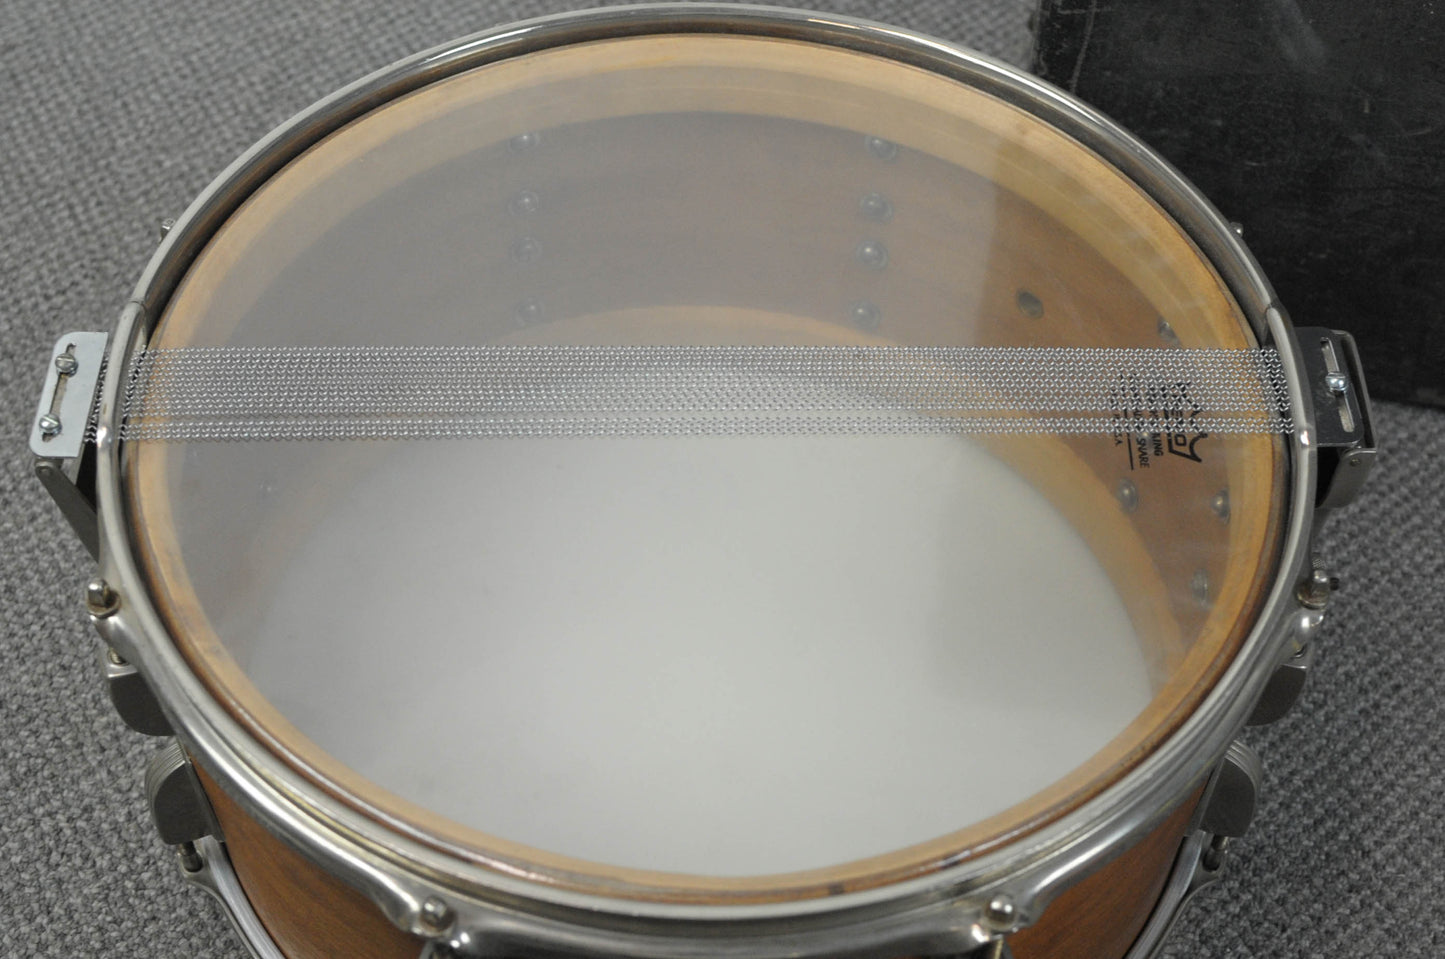 1950s WFL 6.5x14 "Concerto Model" Snare Drum